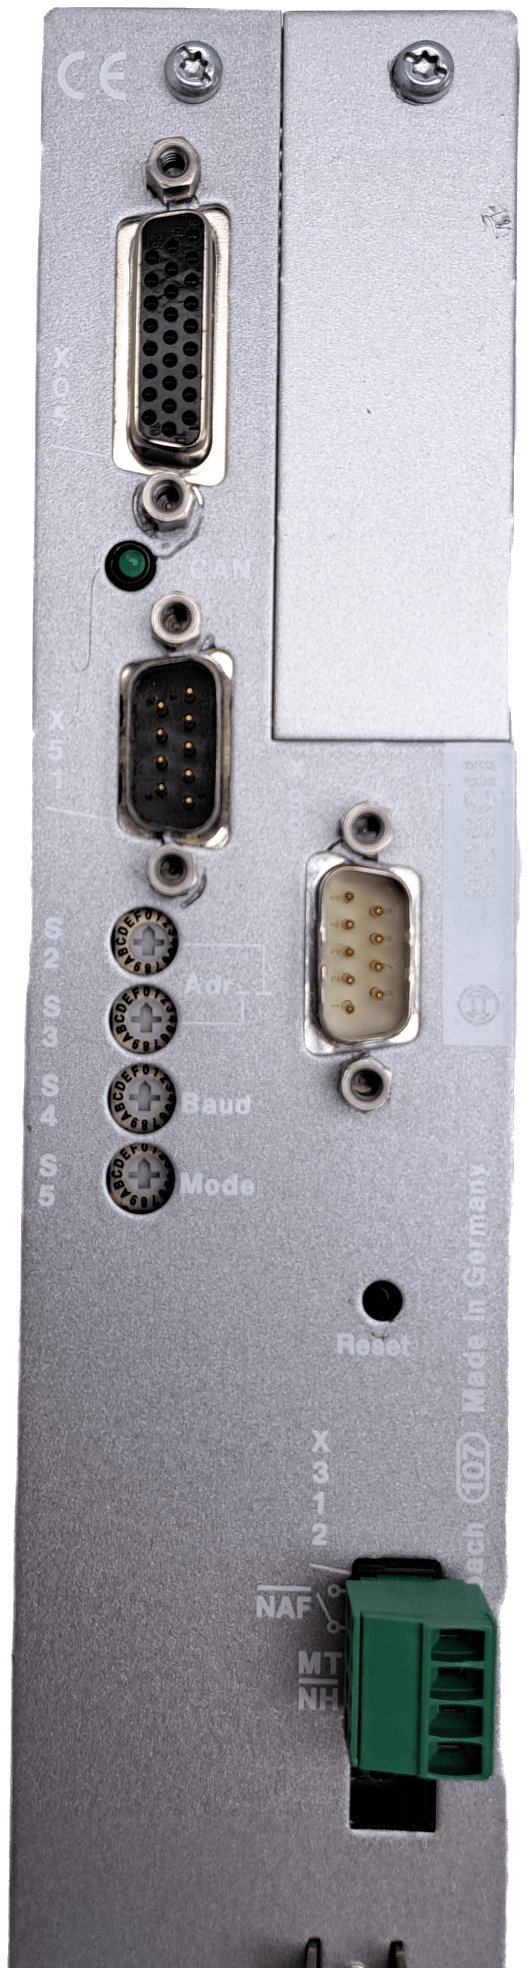 Rexroth DS 15K 9301-D IND-11 - #product_category# | Klenk Maschinenhandel